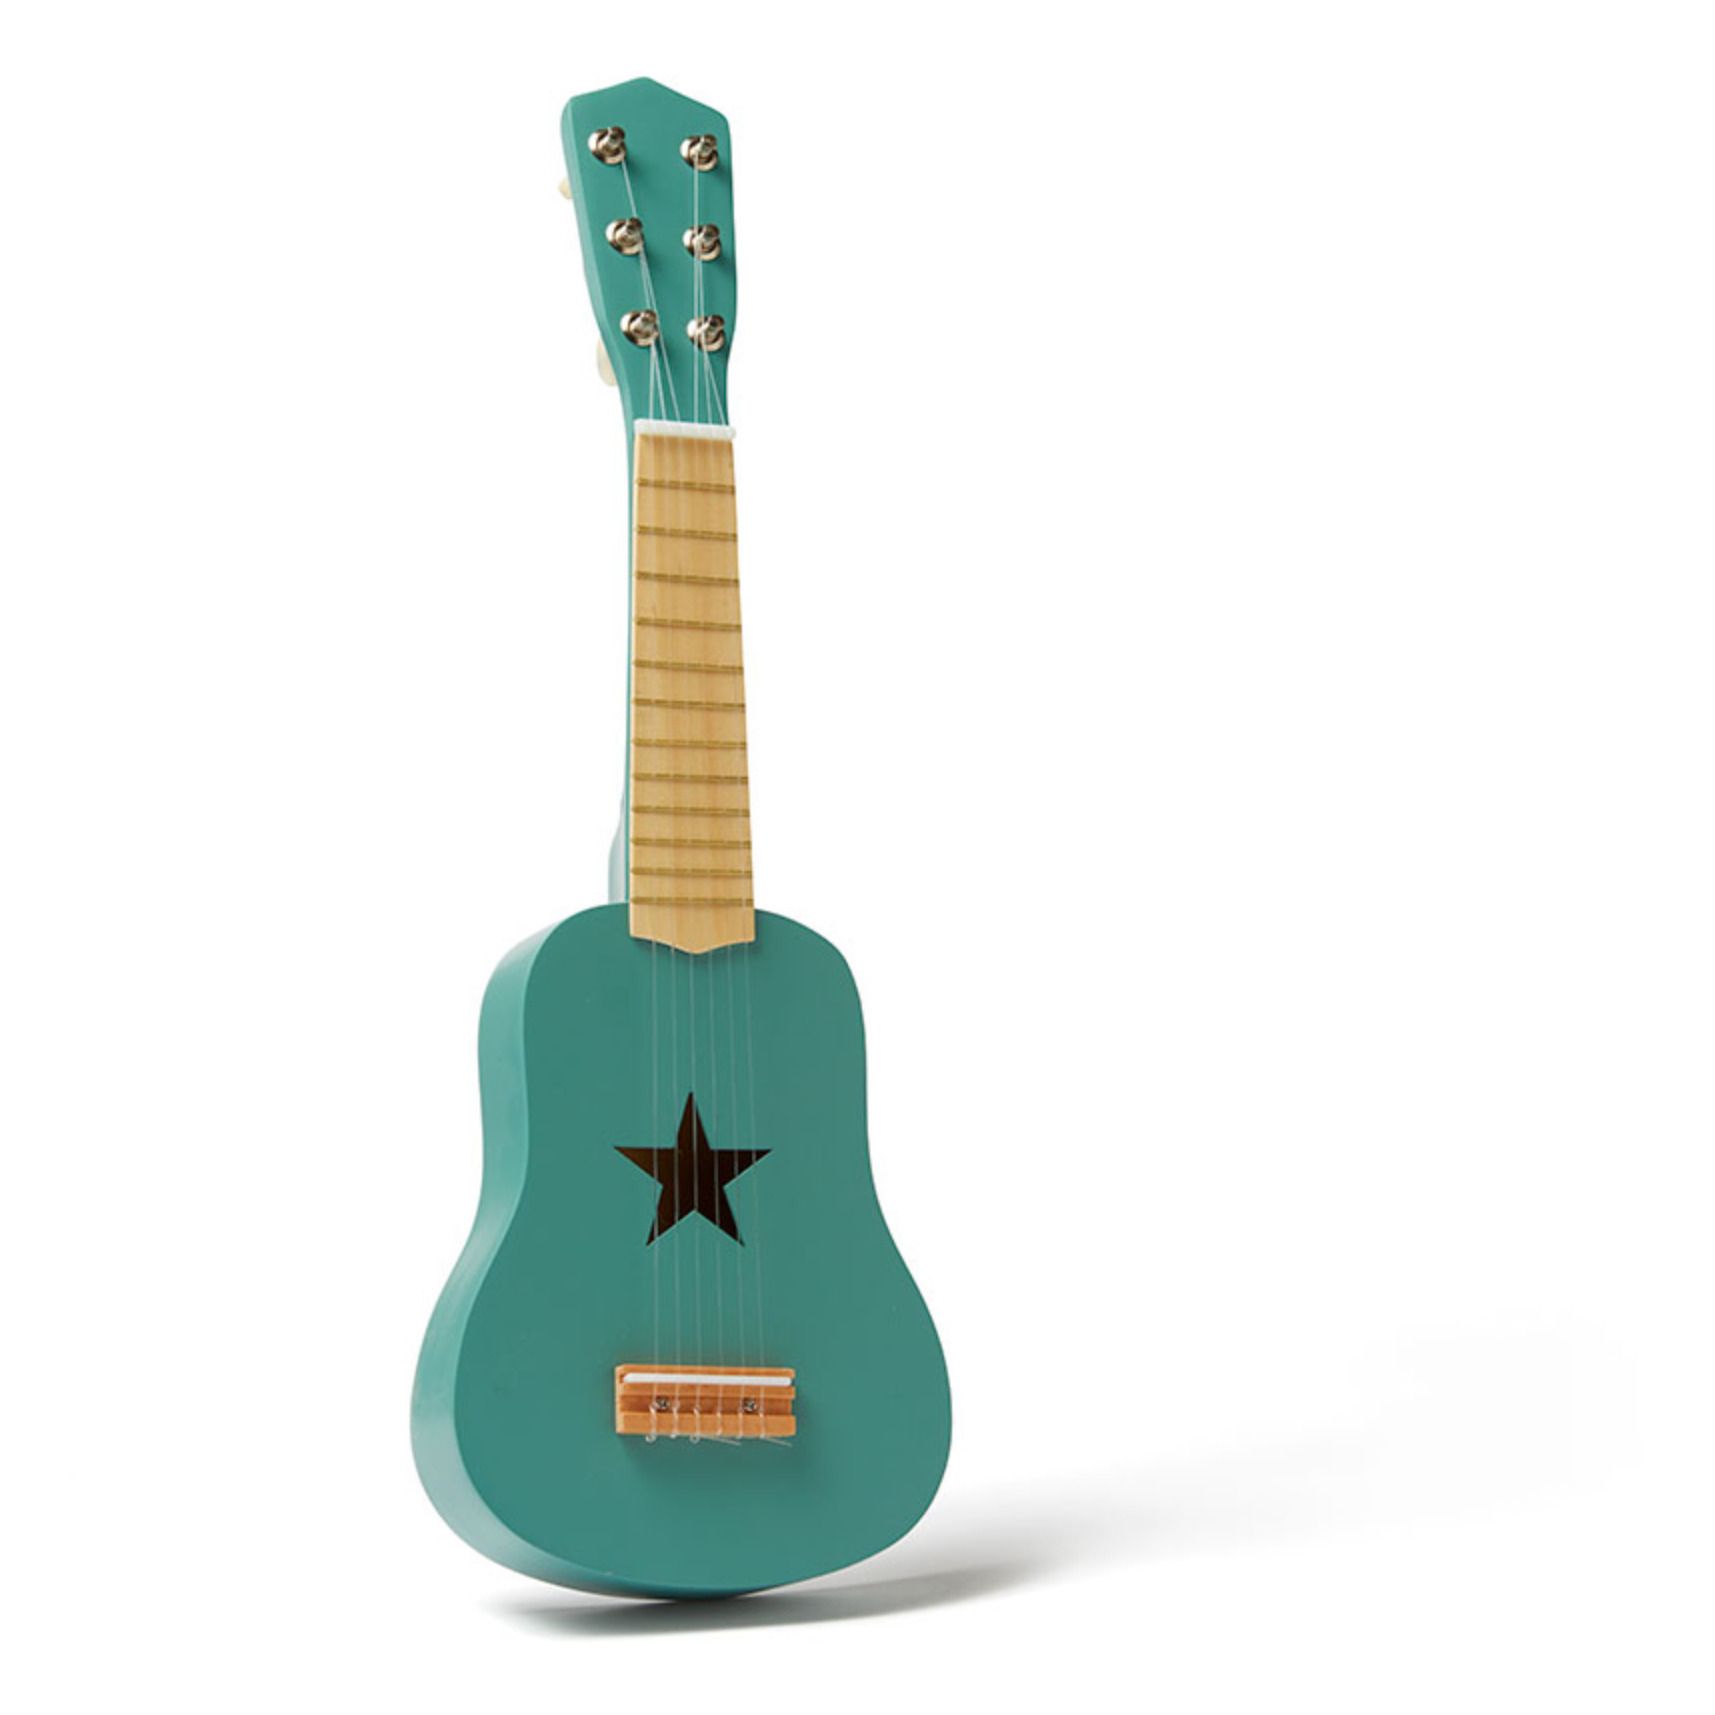 Kid's Concept Wooden Children's Guitar Green one size unisex